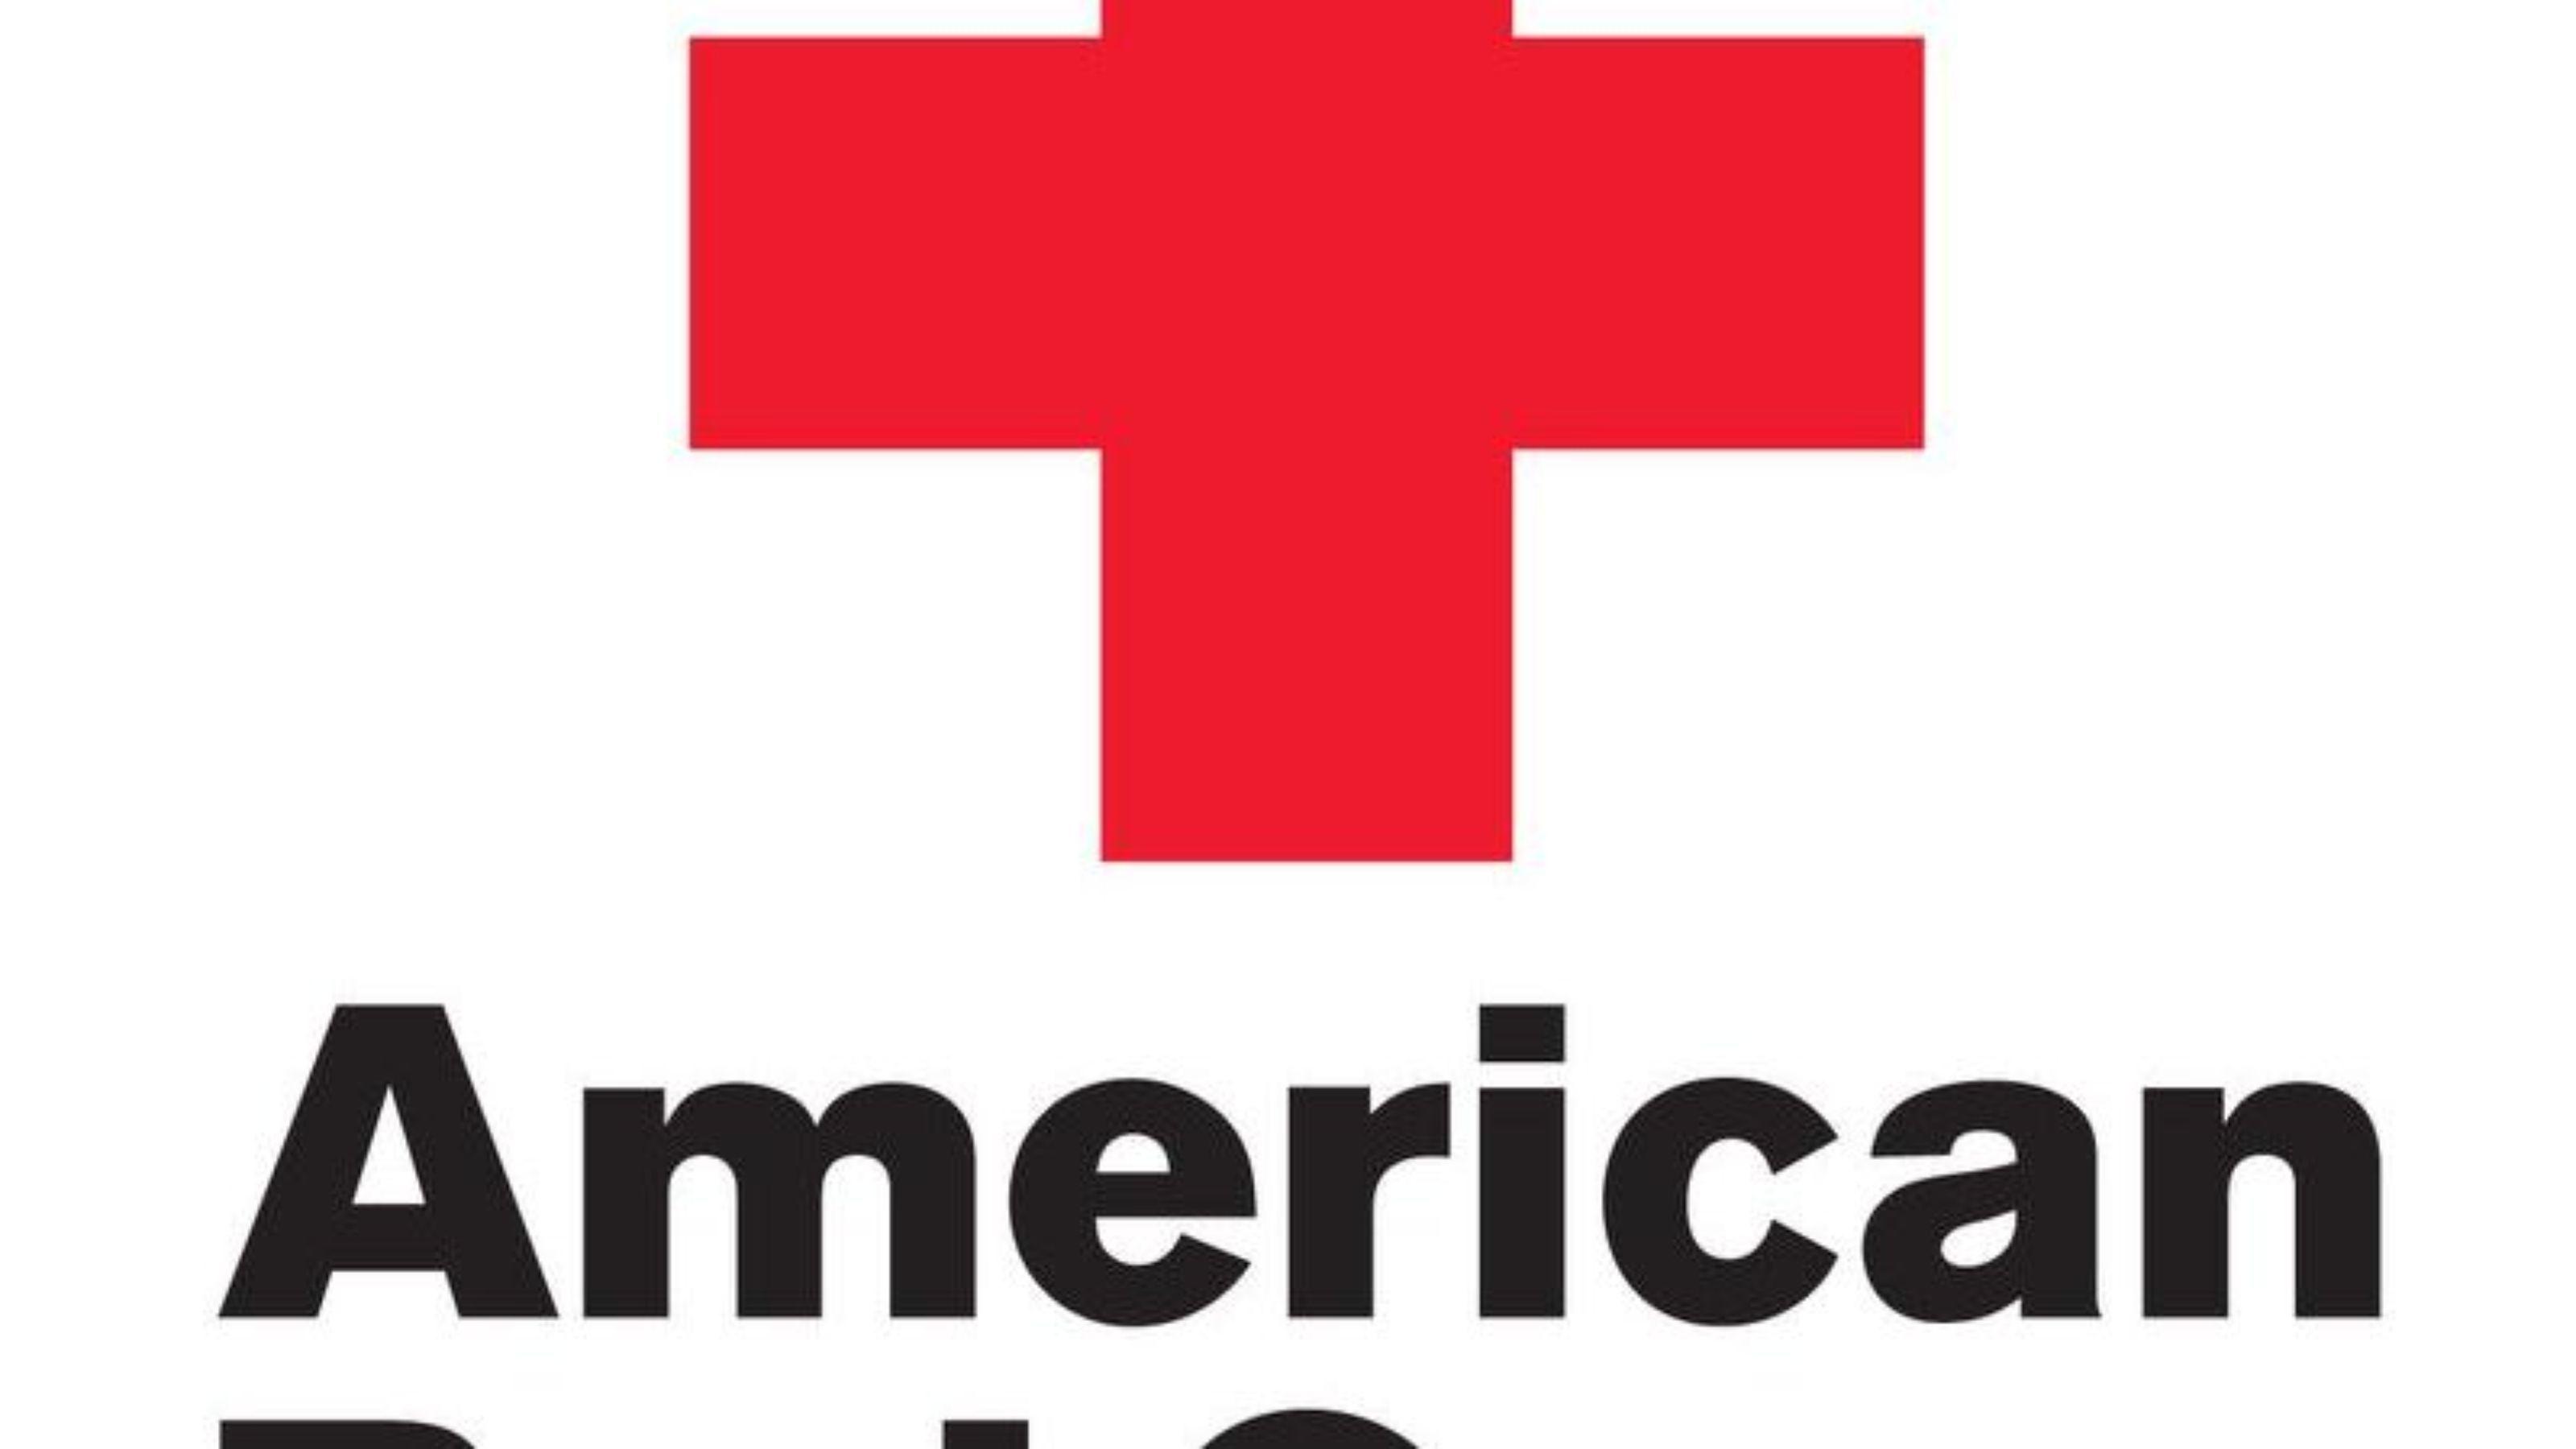 American Red Crss Logo - American red cross Logos